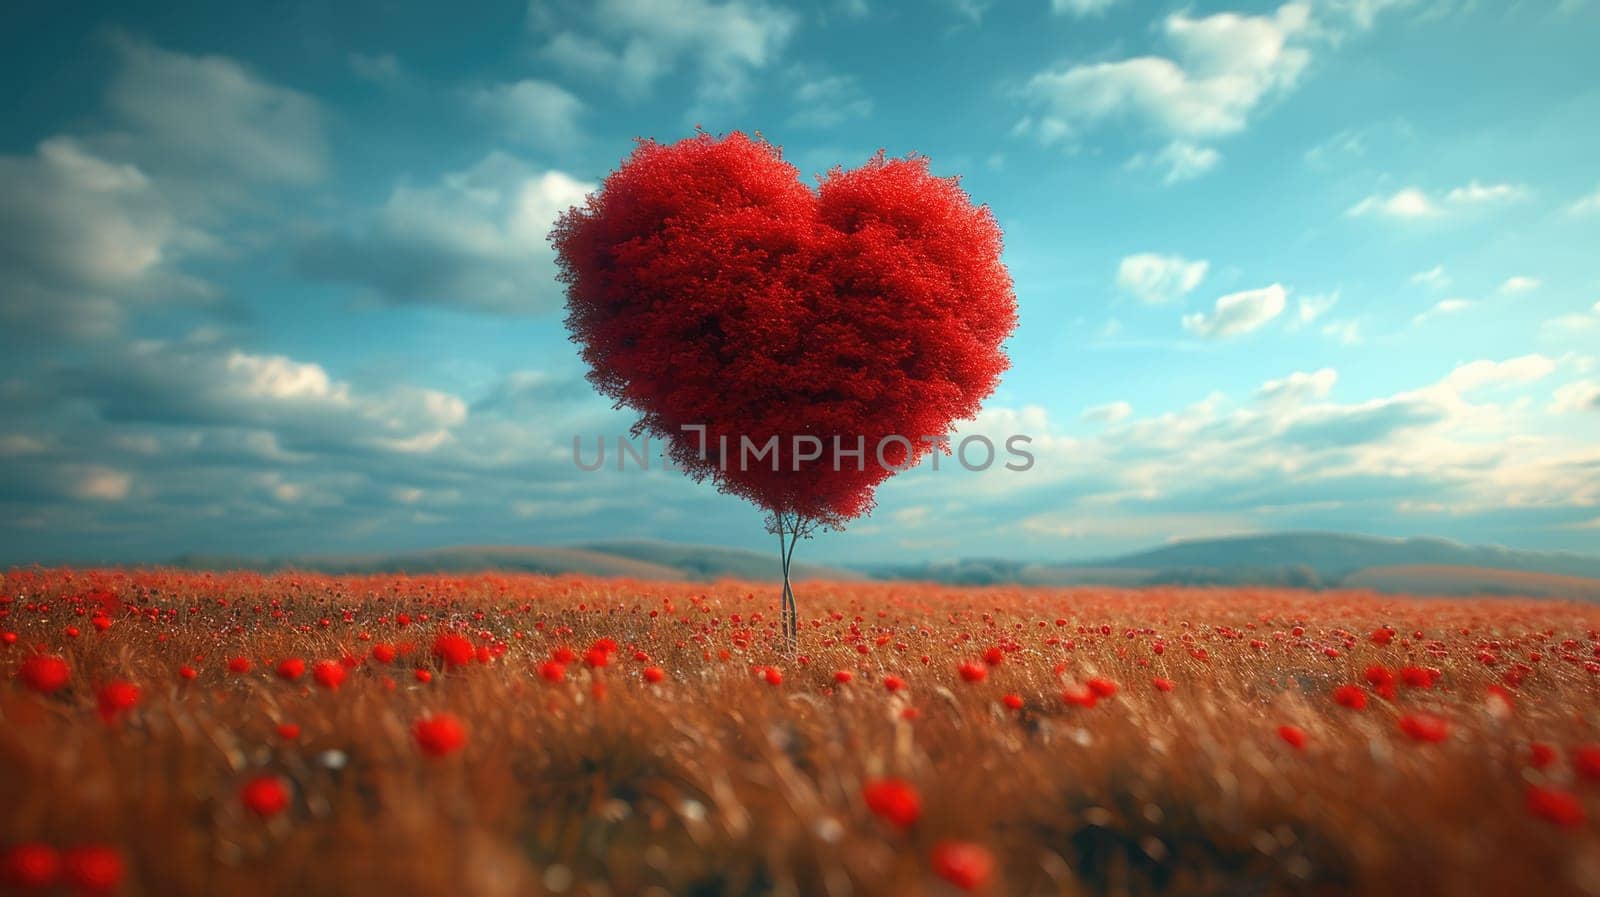 red tree of love in red flower field pragma